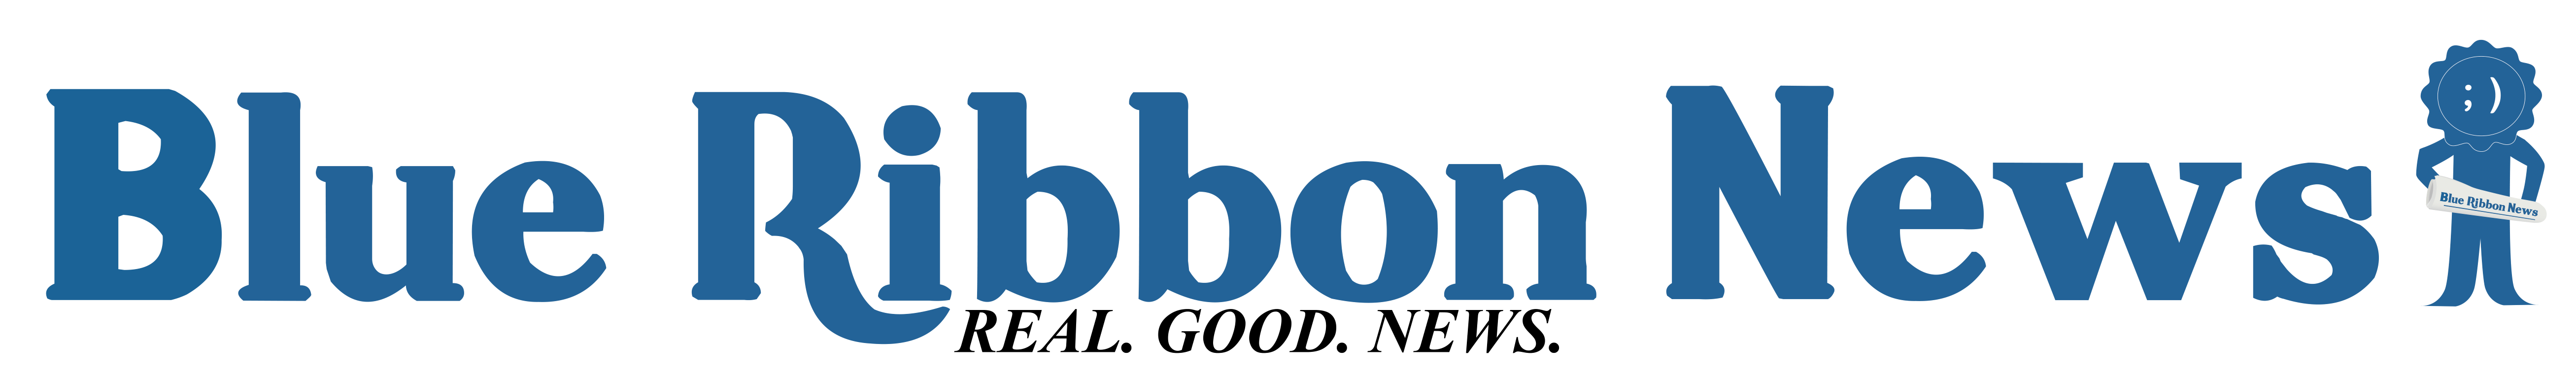 Blue Ribbon News